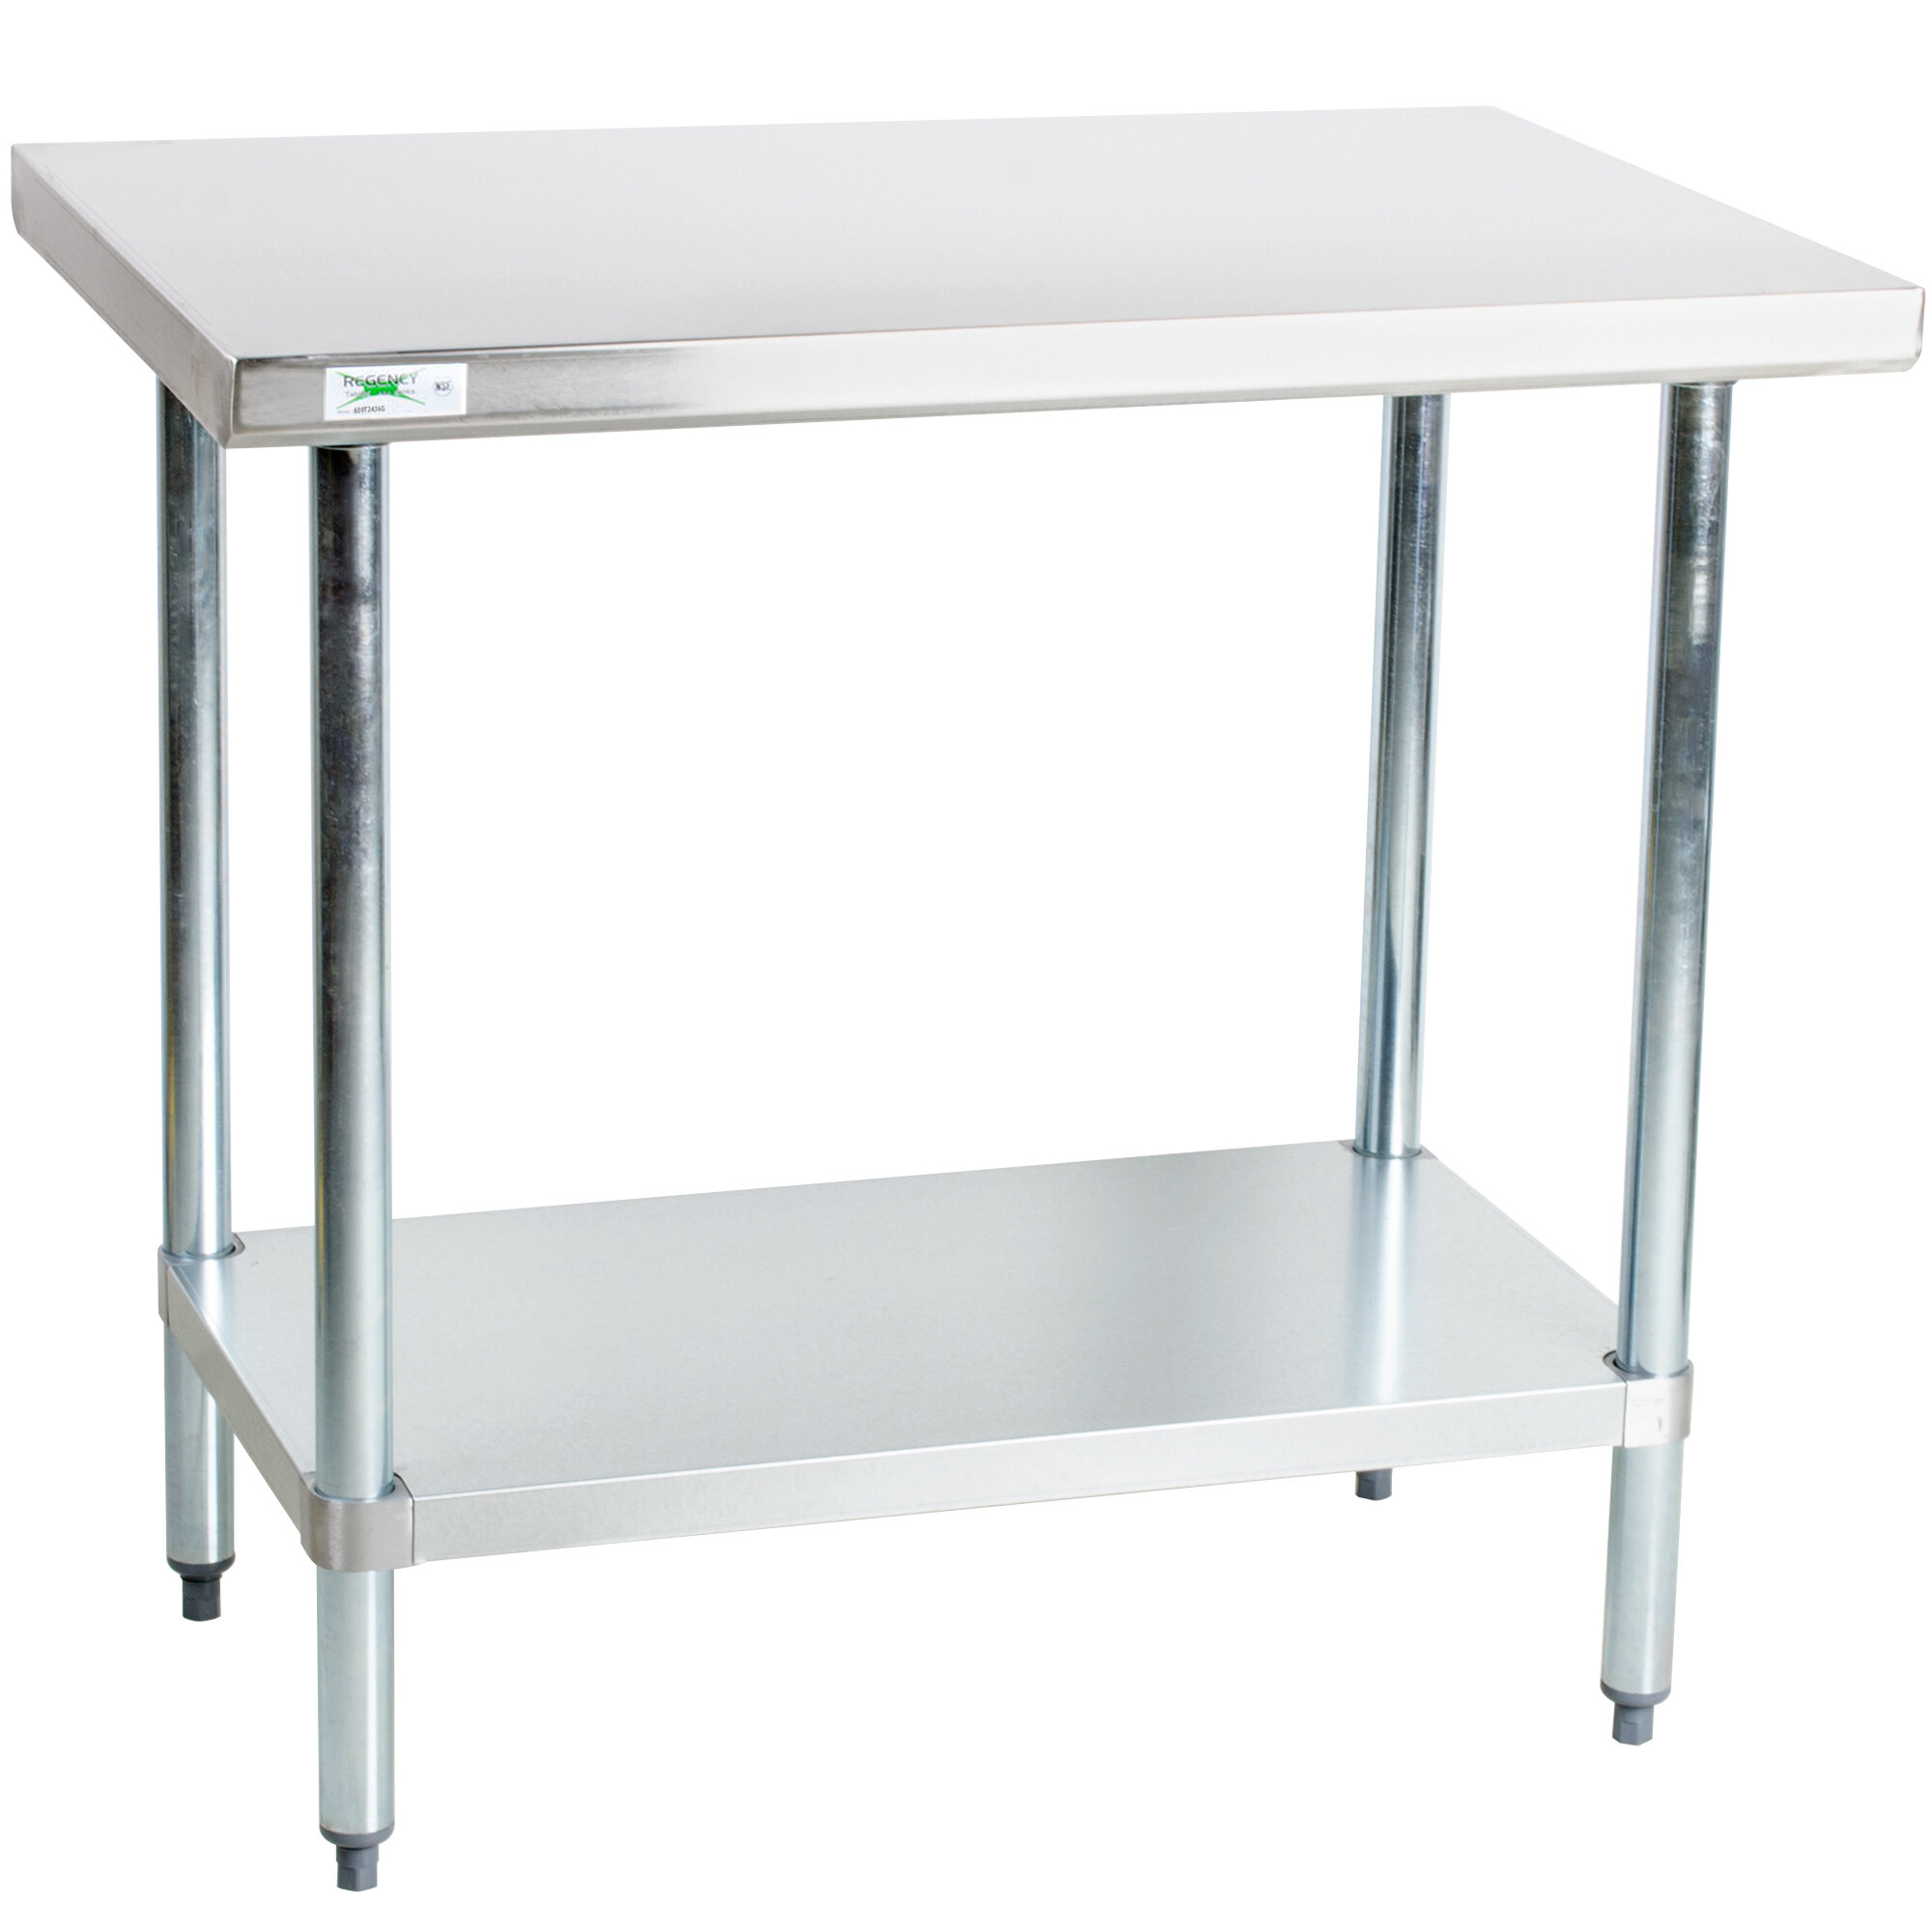 Regency 30" x 36" 18-Gauge 304 Stainless Steel Commercial Work Table Stainless Steel Work Table Legs